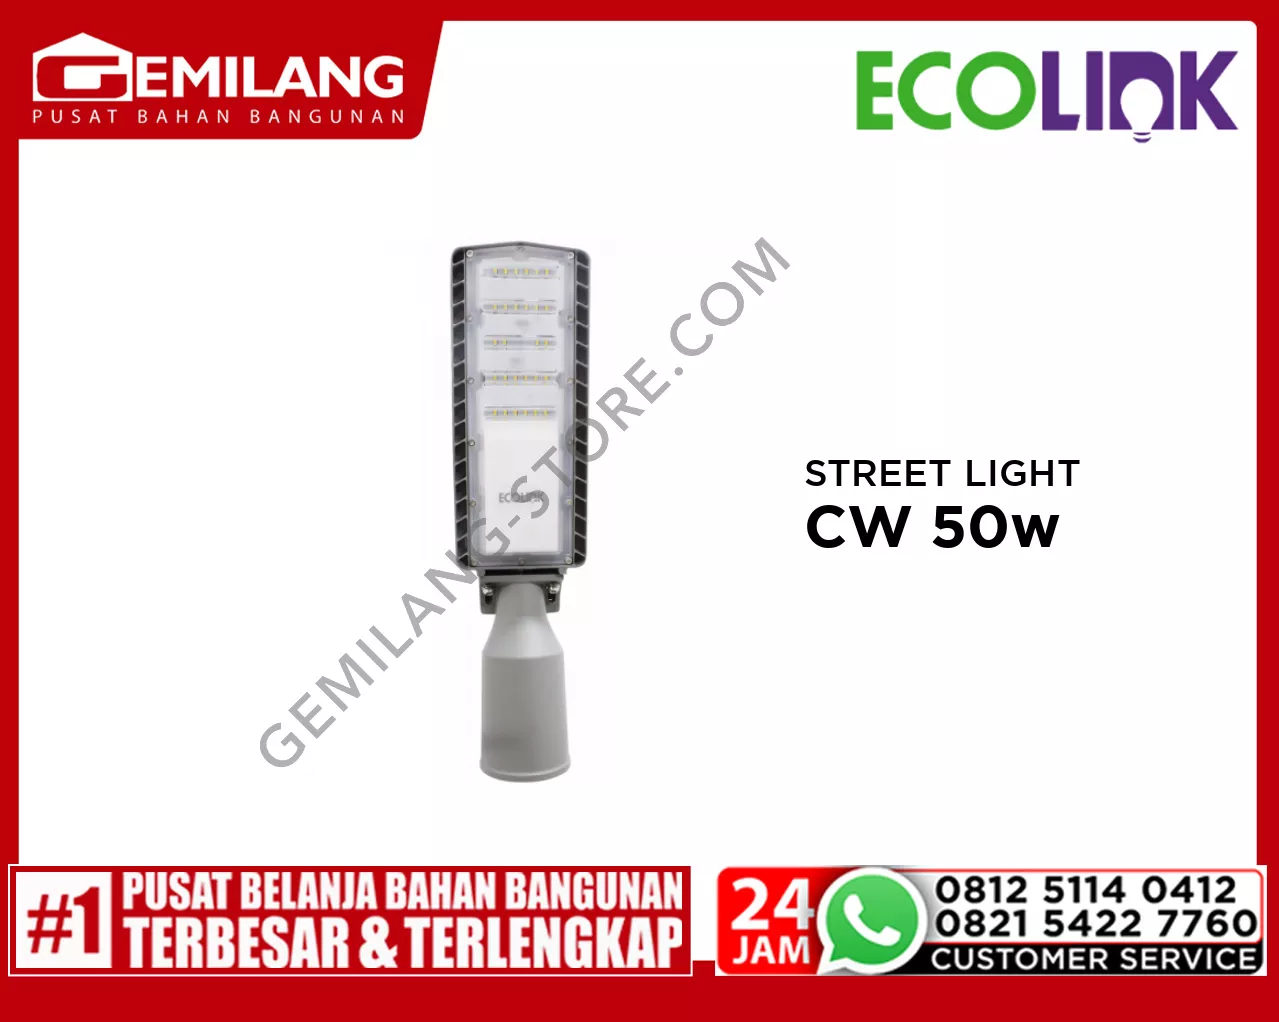 ECOLINK STREET LIGHT SL007 LED45 220-240V CW 50w